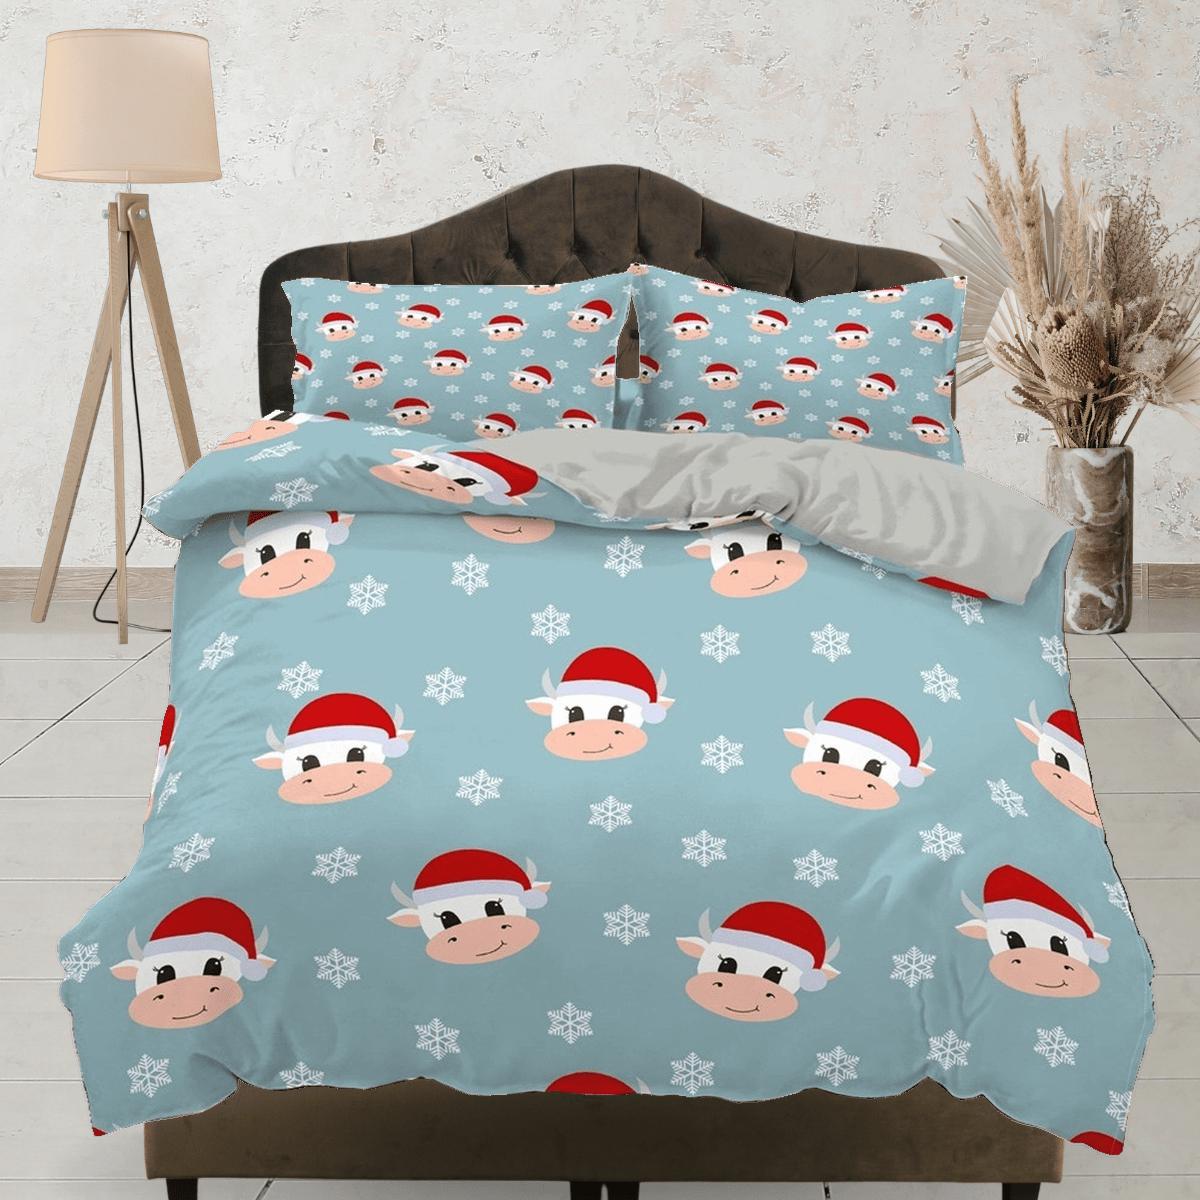 daintyduvet Cute Cow Christmas bedding & pillowcase holiday gift blue duvet cover king queen full twin toddler bedding baby Christmas farmhouse decor